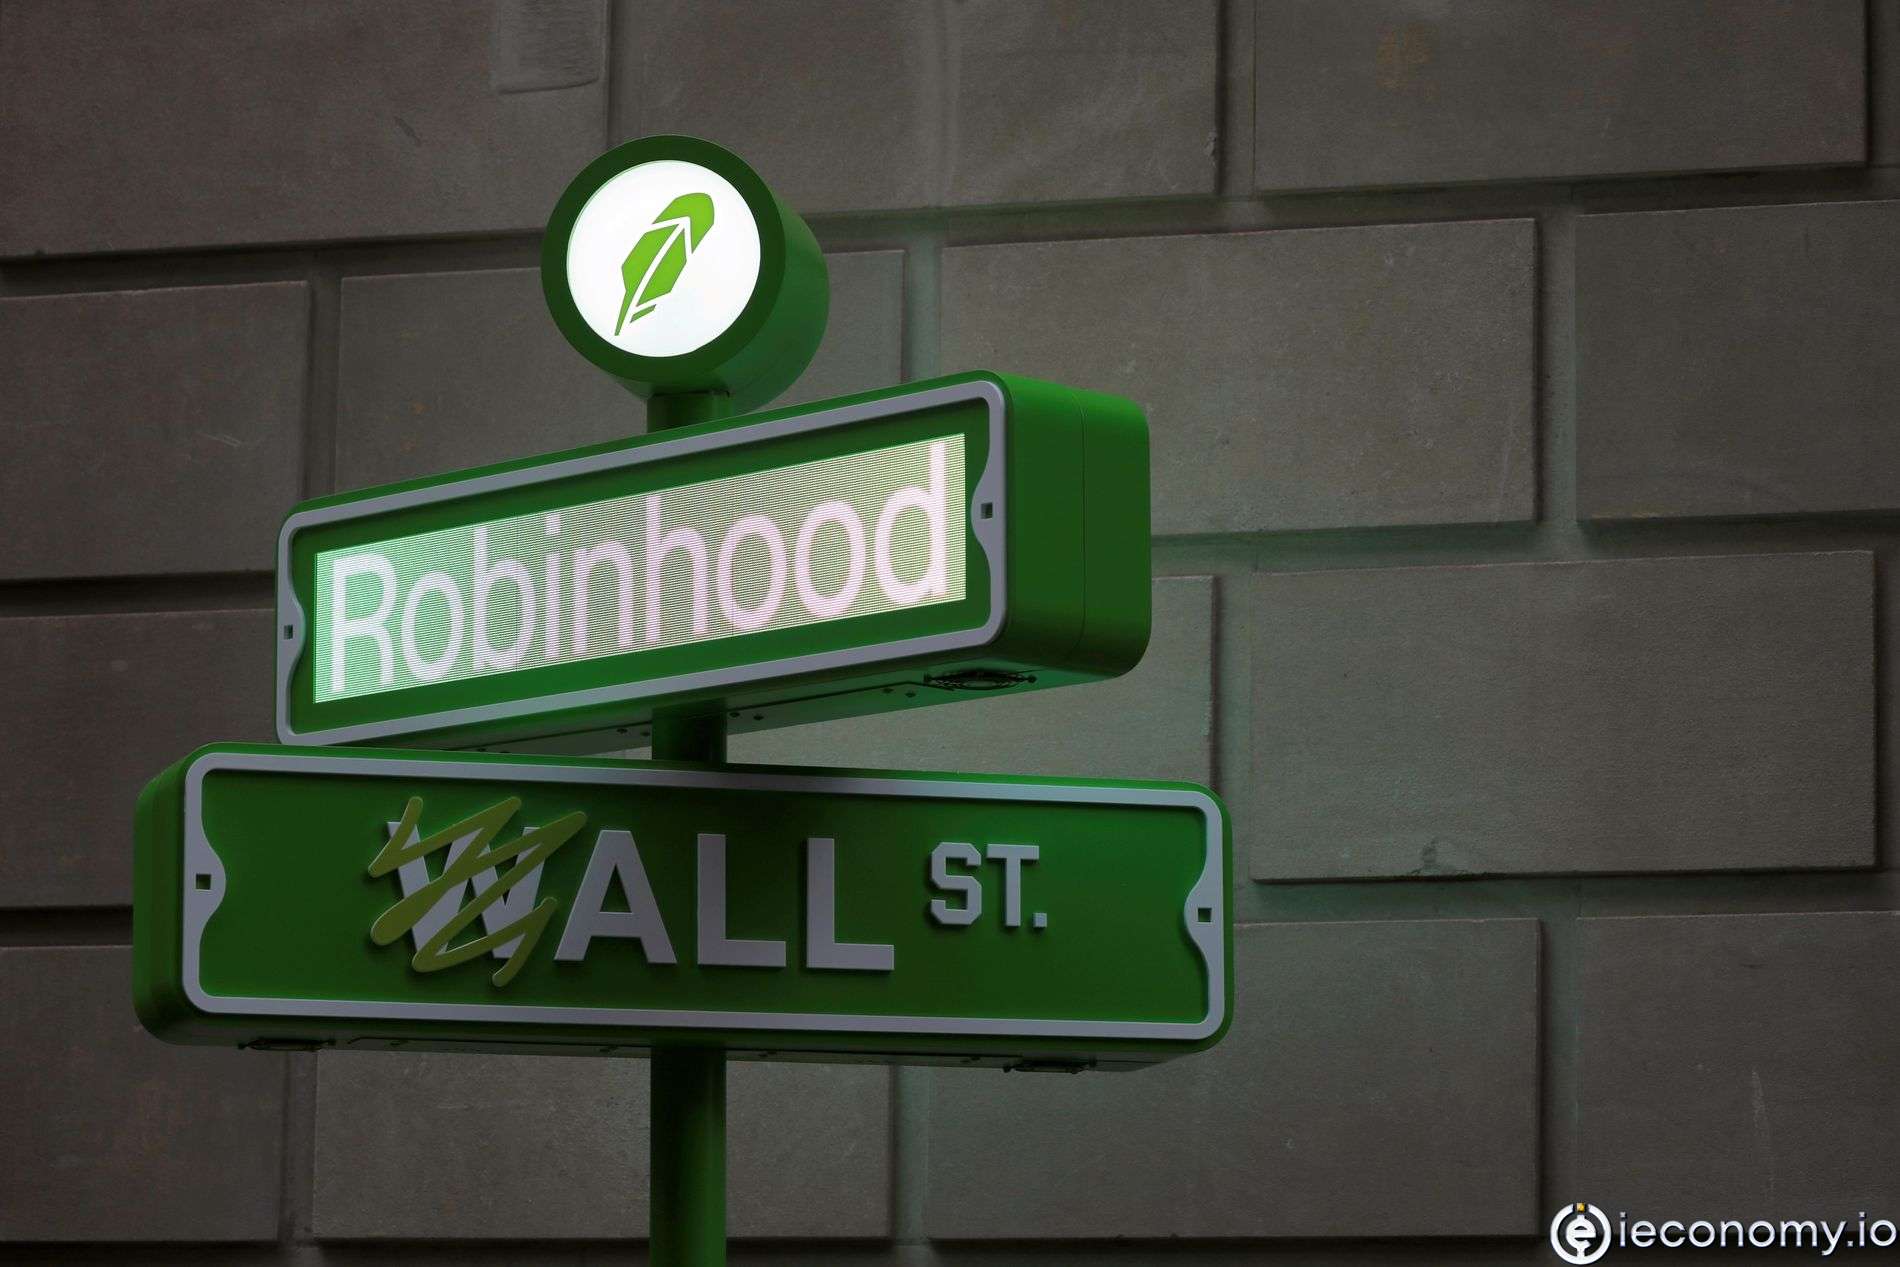 SEC is sending Robinhood's shares downhill